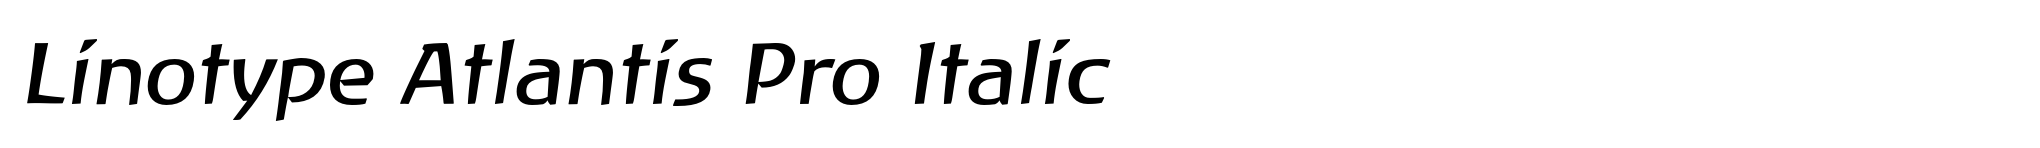 Linotype Atlantis Pro Italic image